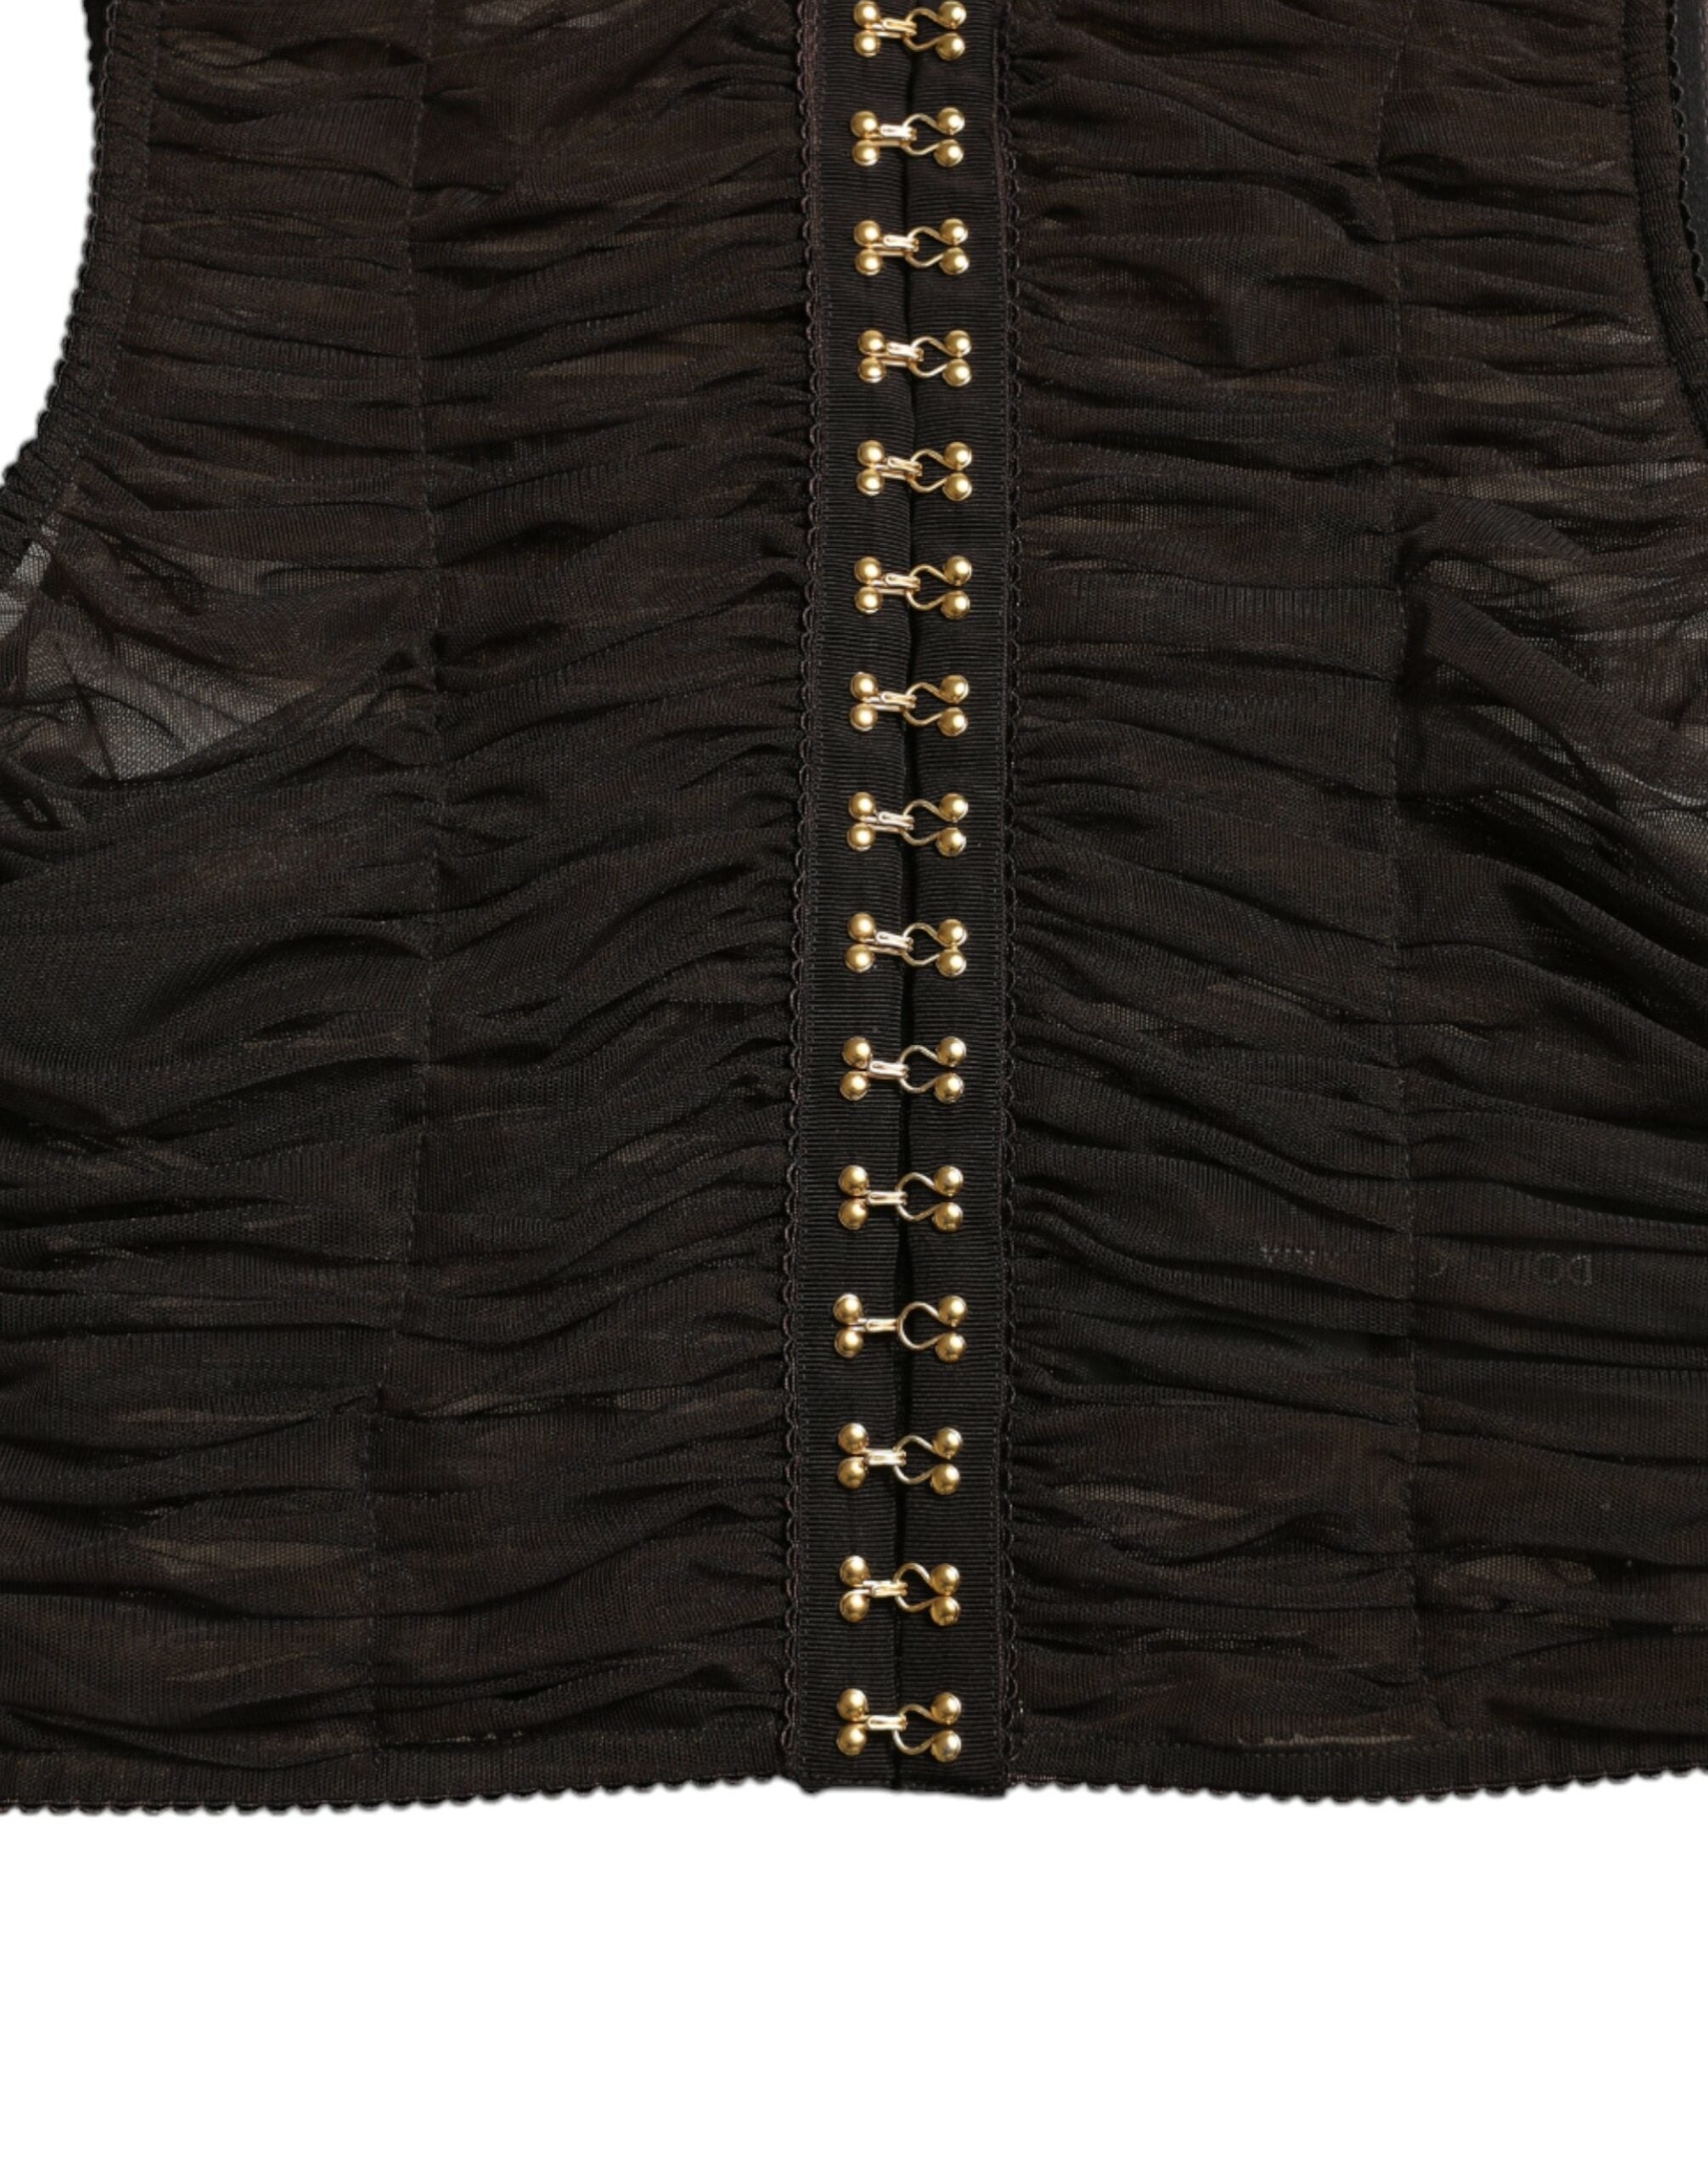 Dolce & Gabbana Embellished Cropped Sleeveless Top